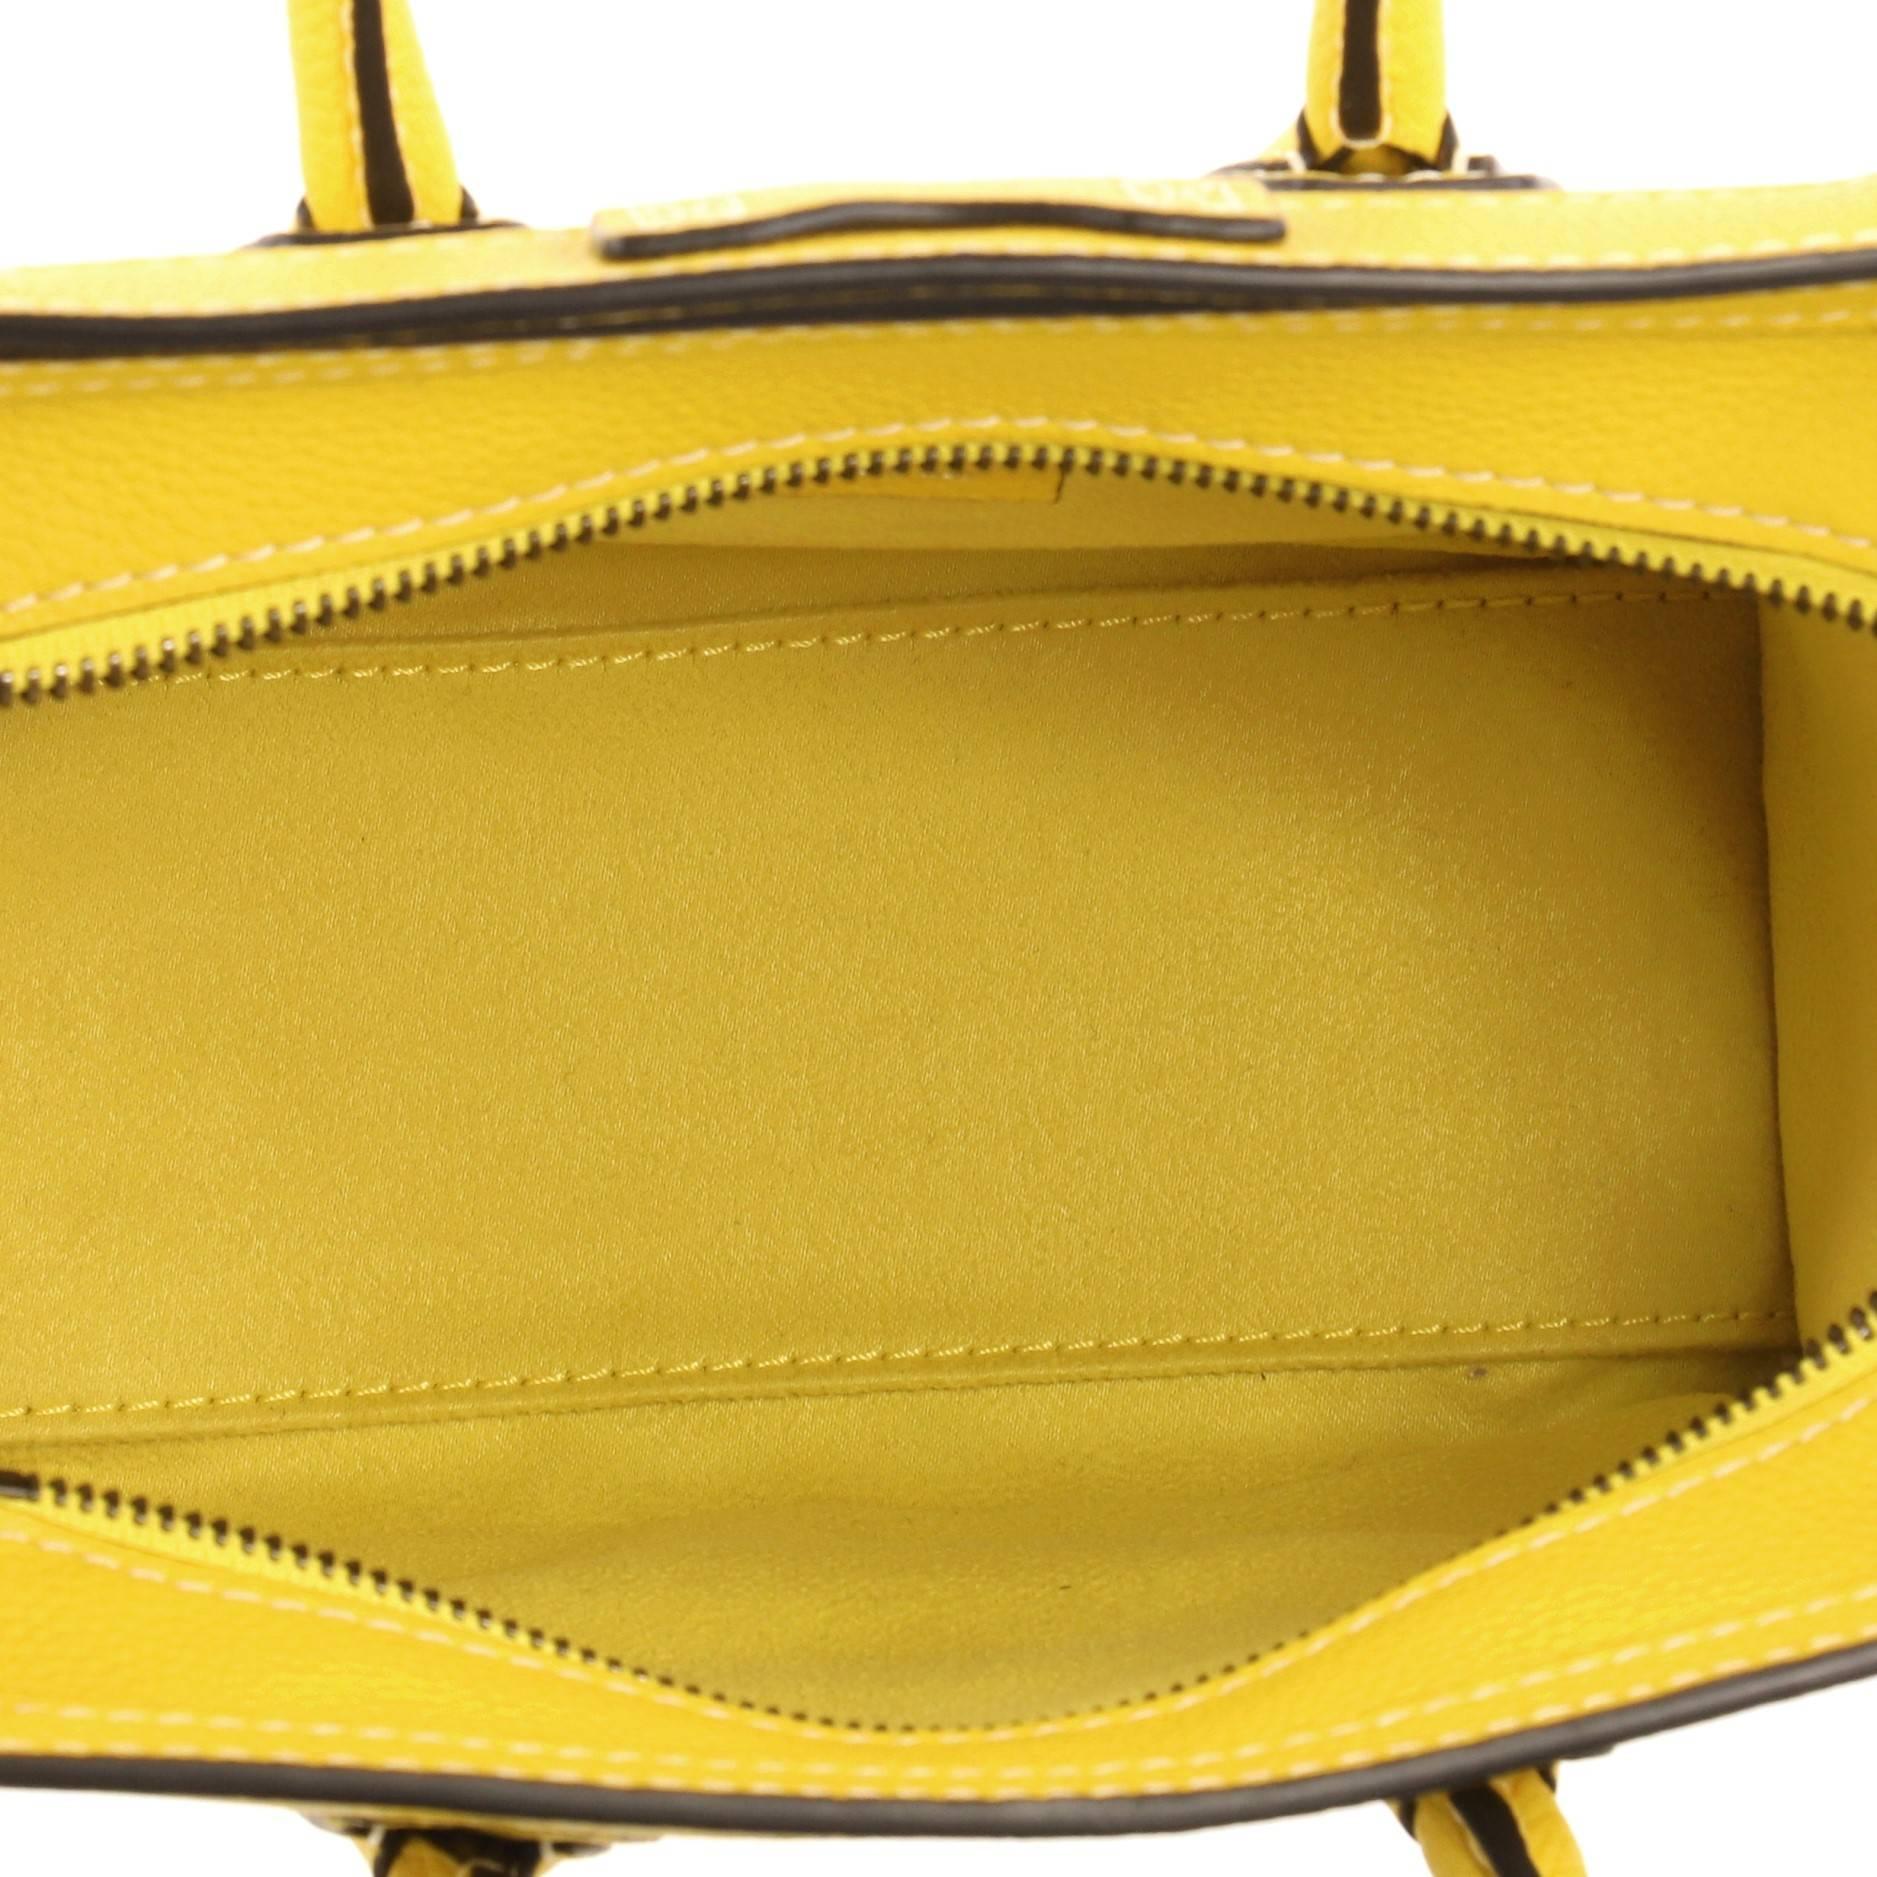 Celine Luggage Handbag Grainy Leather Nano 2